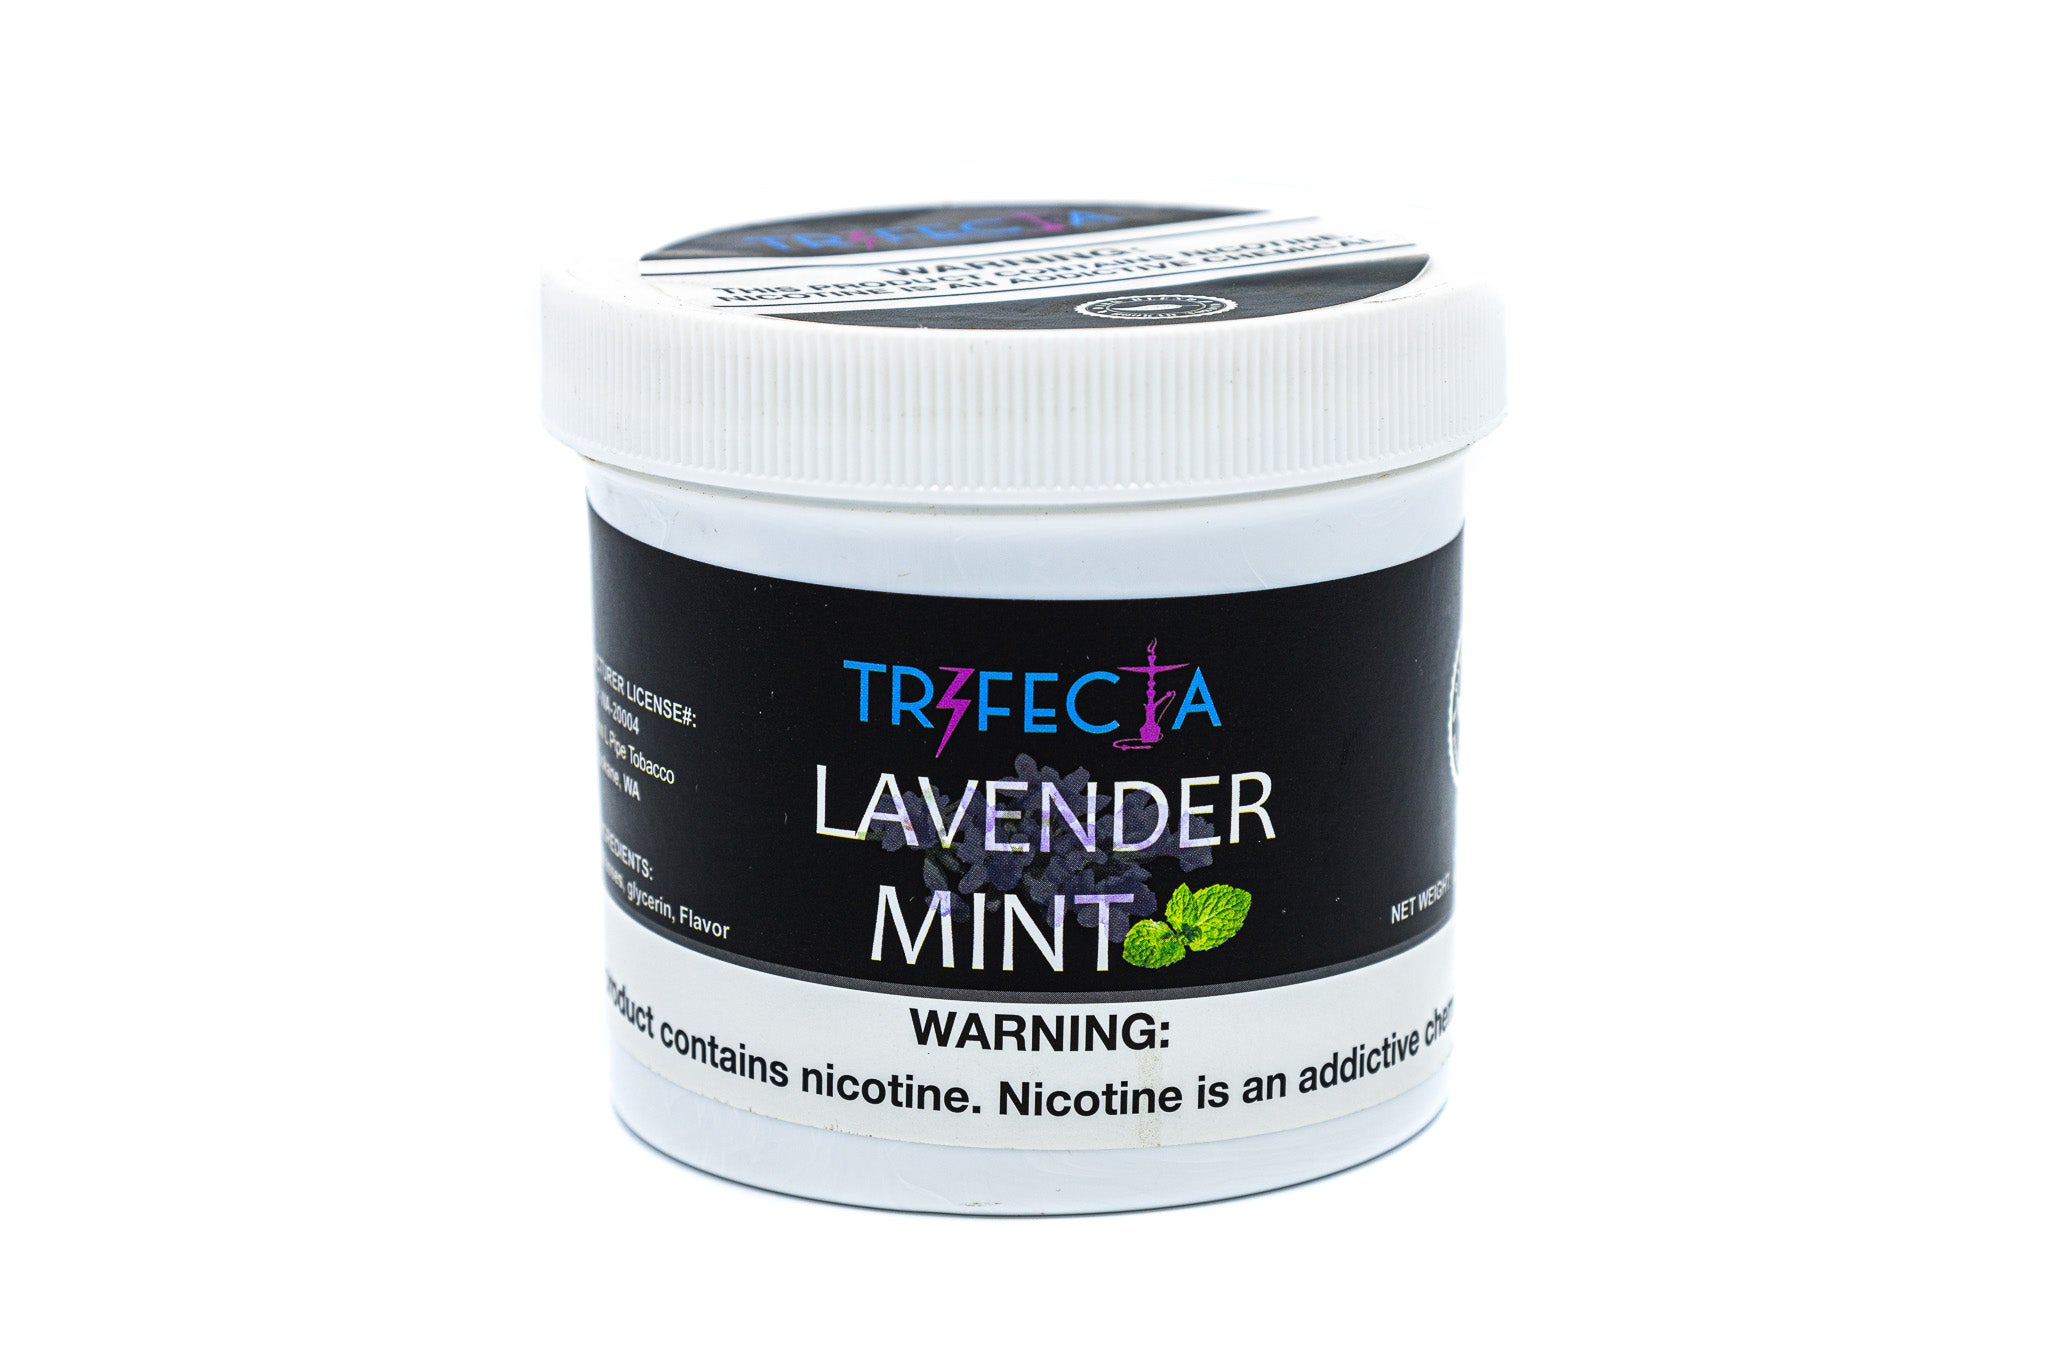 Trifecta Lavender Mint 250G - Smoxygen